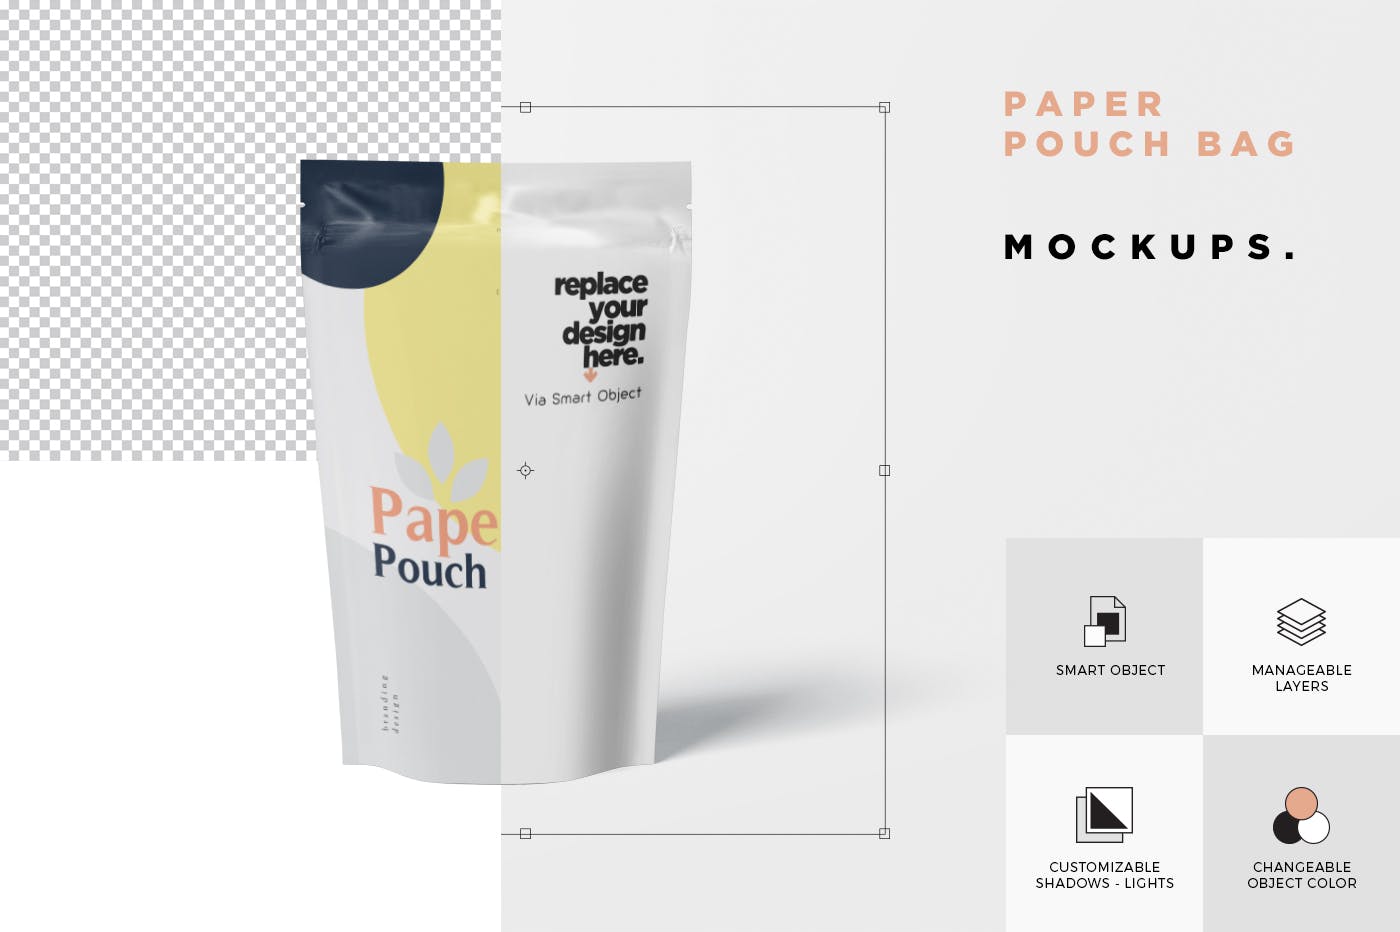 食品自封袋包装设计效果图16设计网精选 Paper Pouch Bag Mockup – Large Size插图(5)